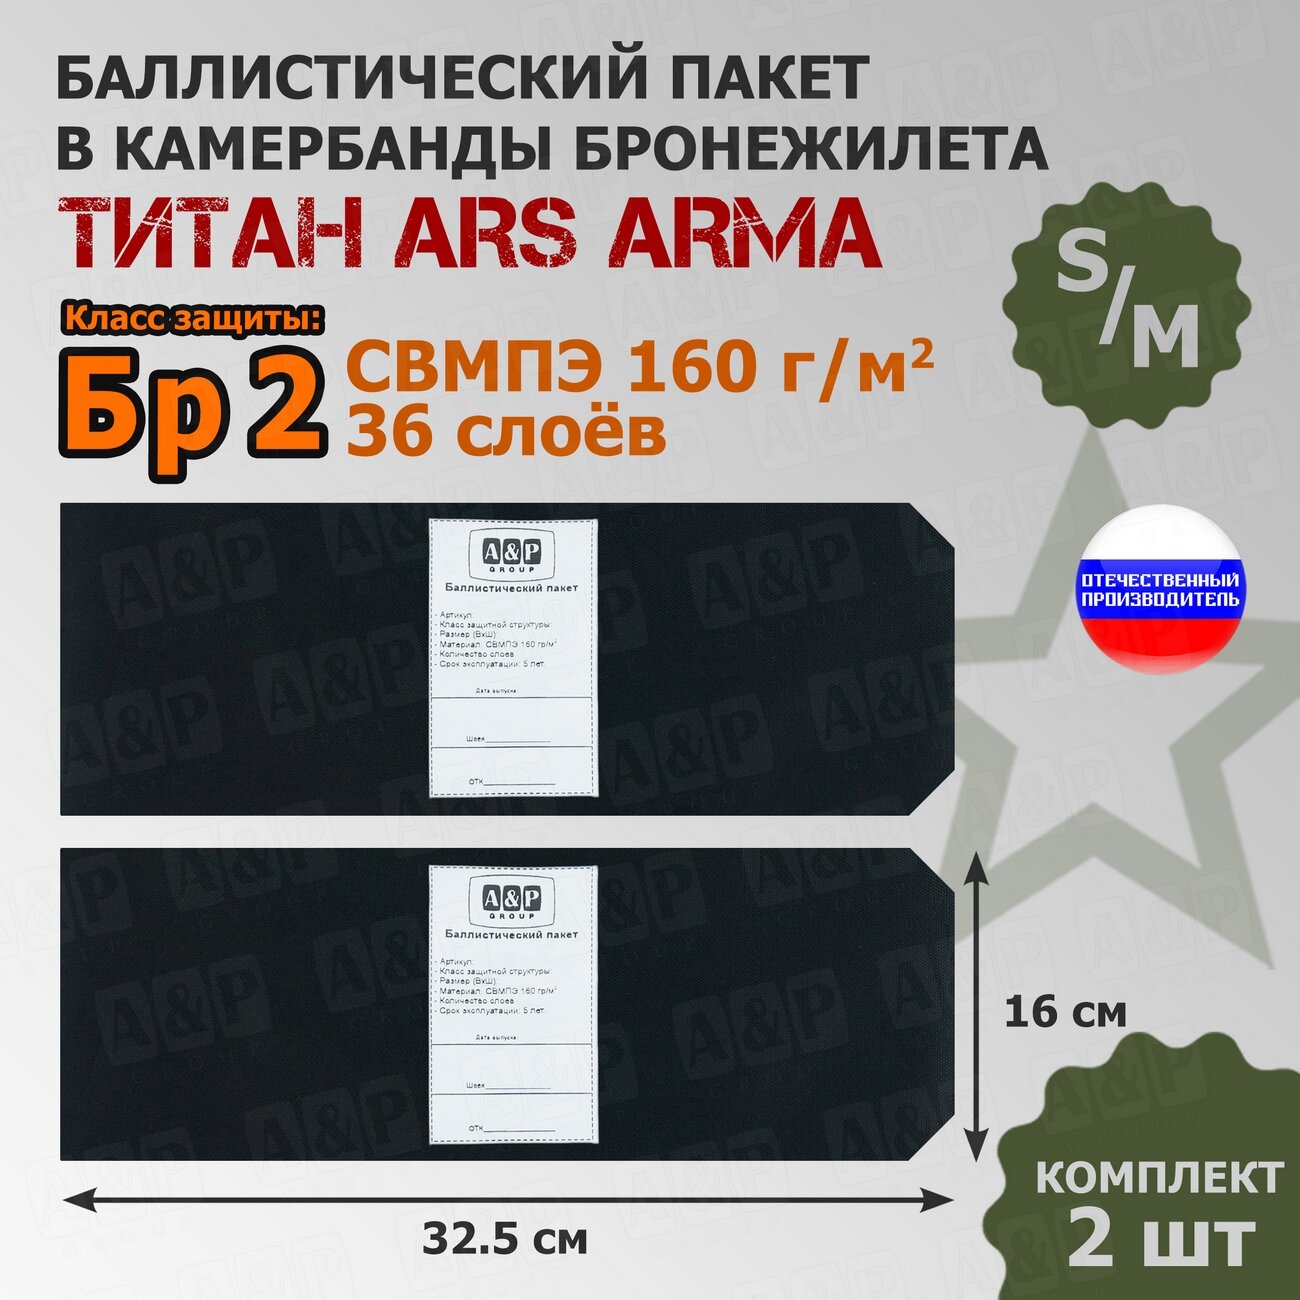 Баллистические пакеты в камербанды бронежилета Титан Ars Arma (размер S/M). 32,5x16 см. Класс защитной структуры Бр 2.